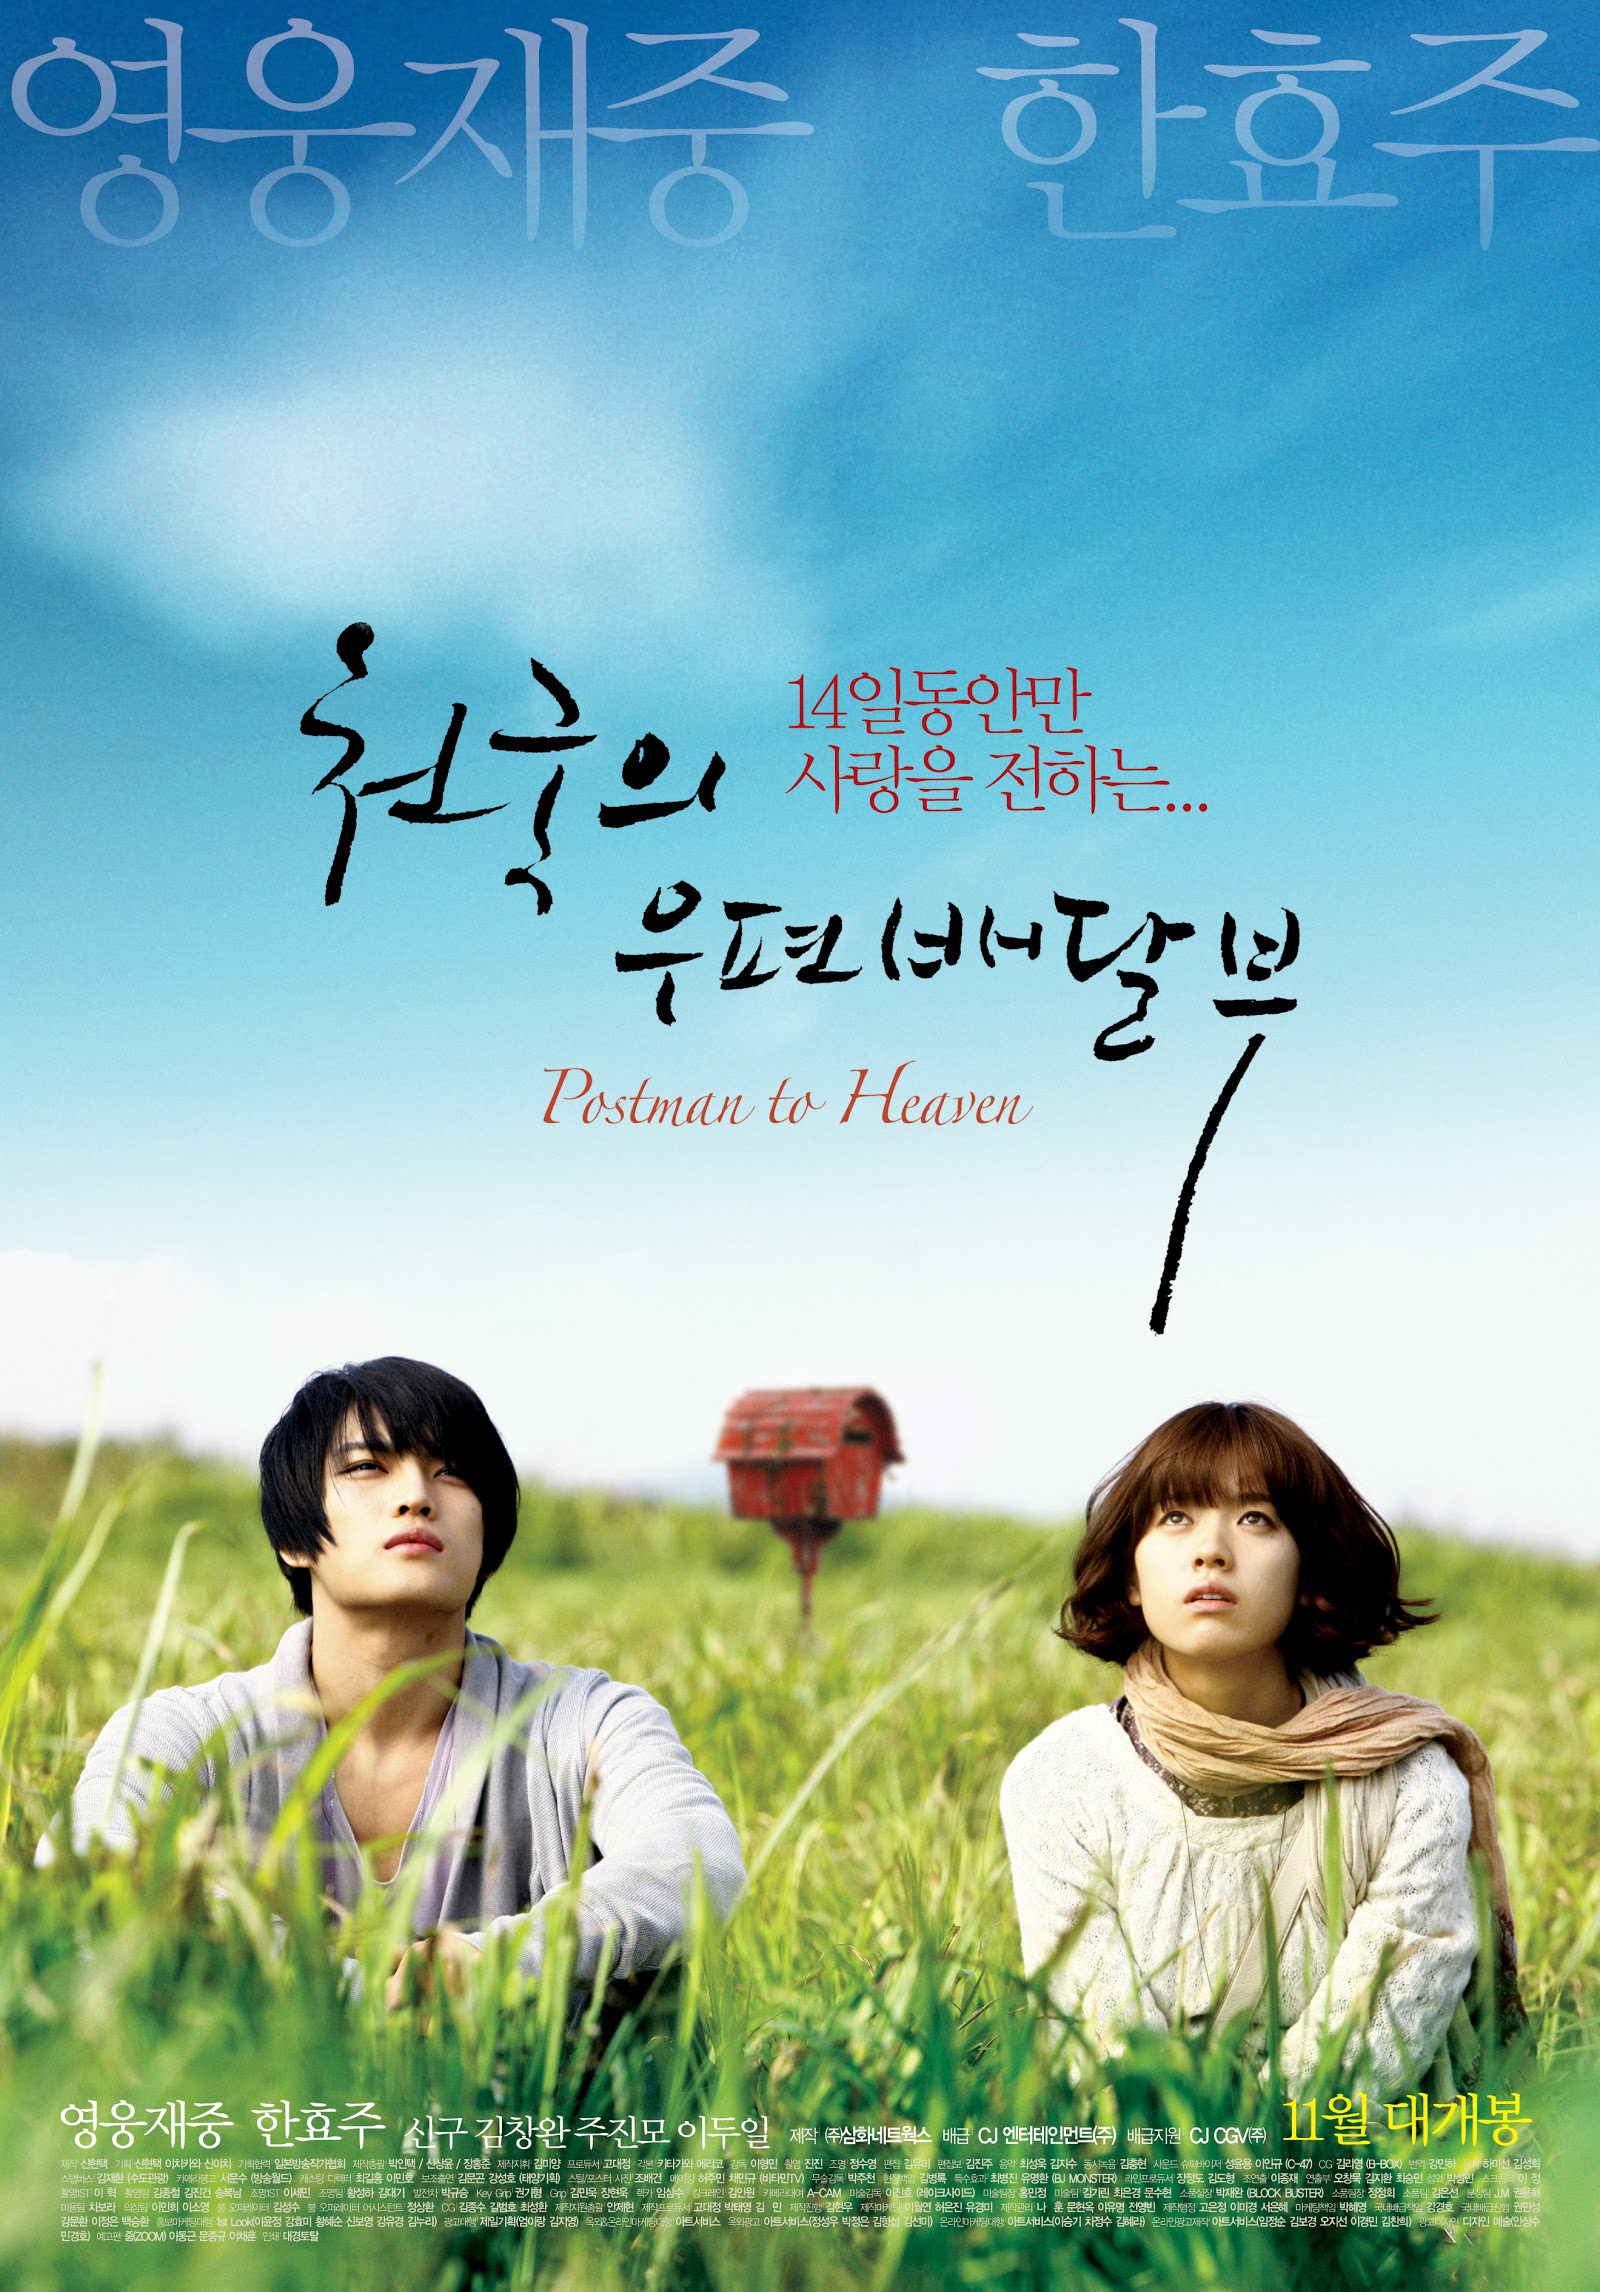 فیلم کره ای پستچی بهشت Postman to Heaven 2009